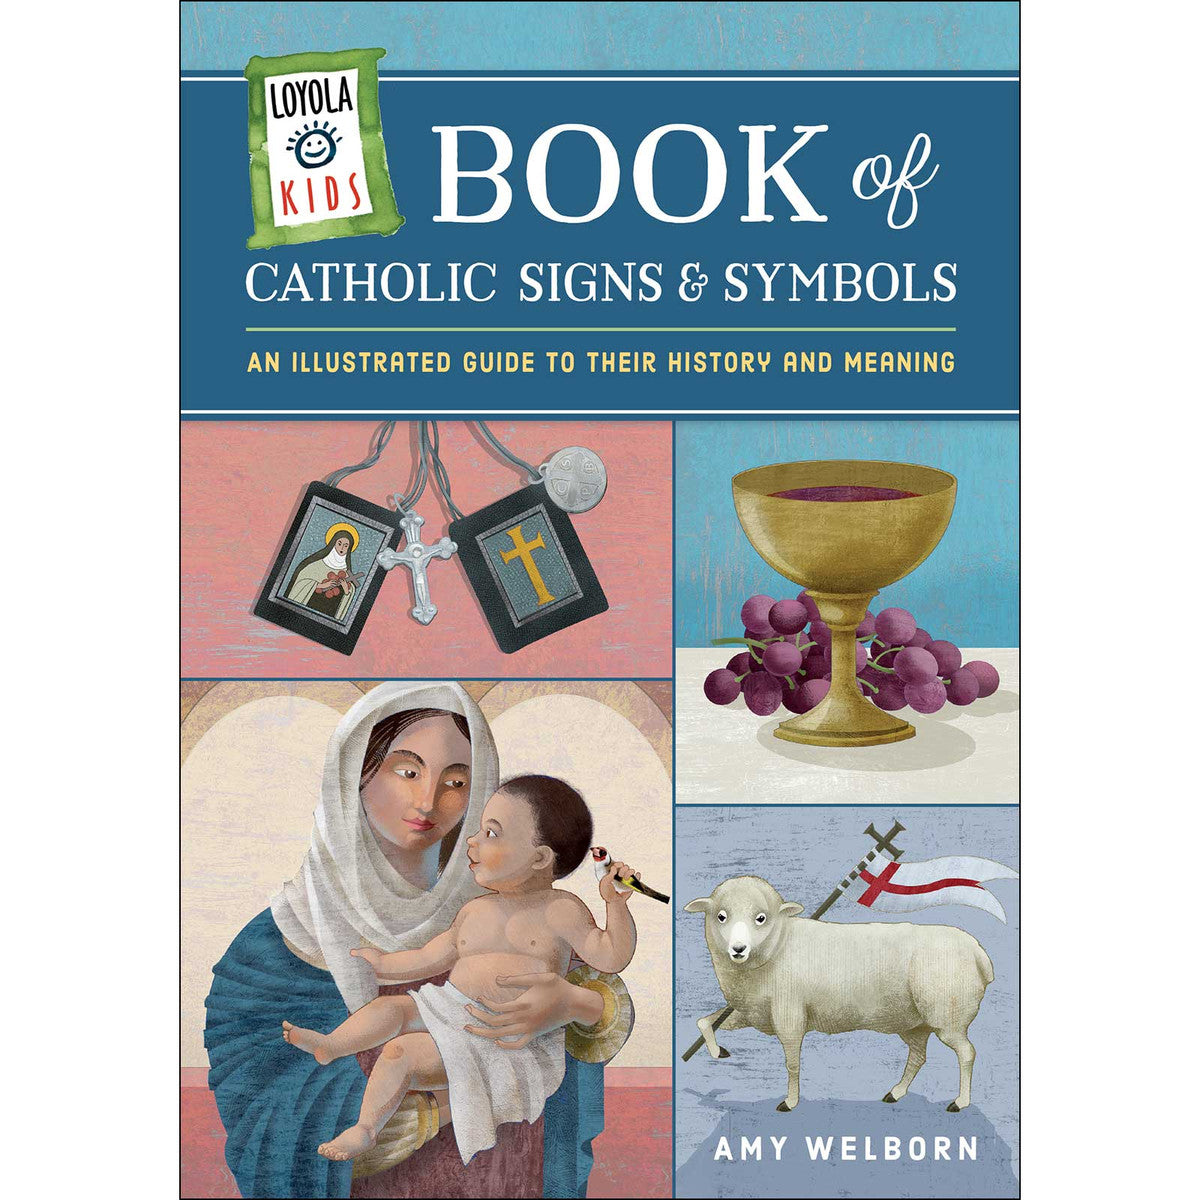 Loyola Kids Book of Catholic Signs and Symbols